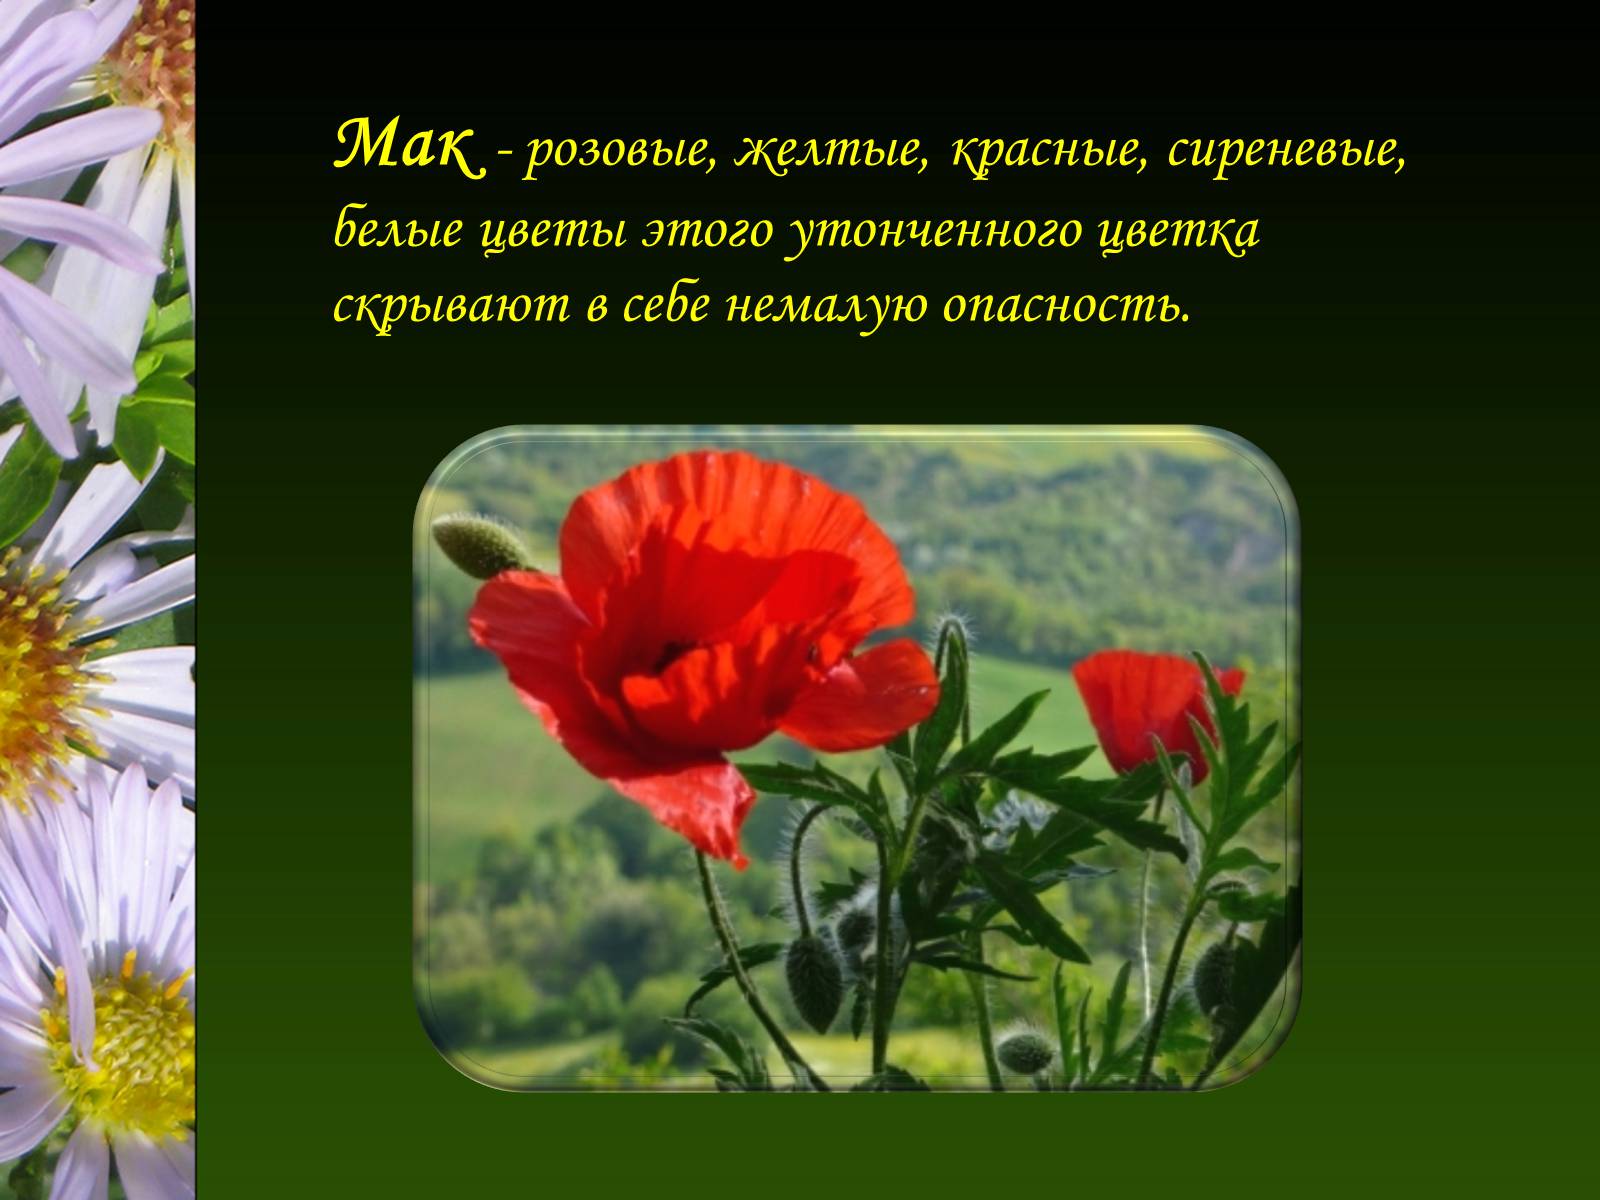 Презентація на тему «Ядовитые растения Украины» - Слайд #26